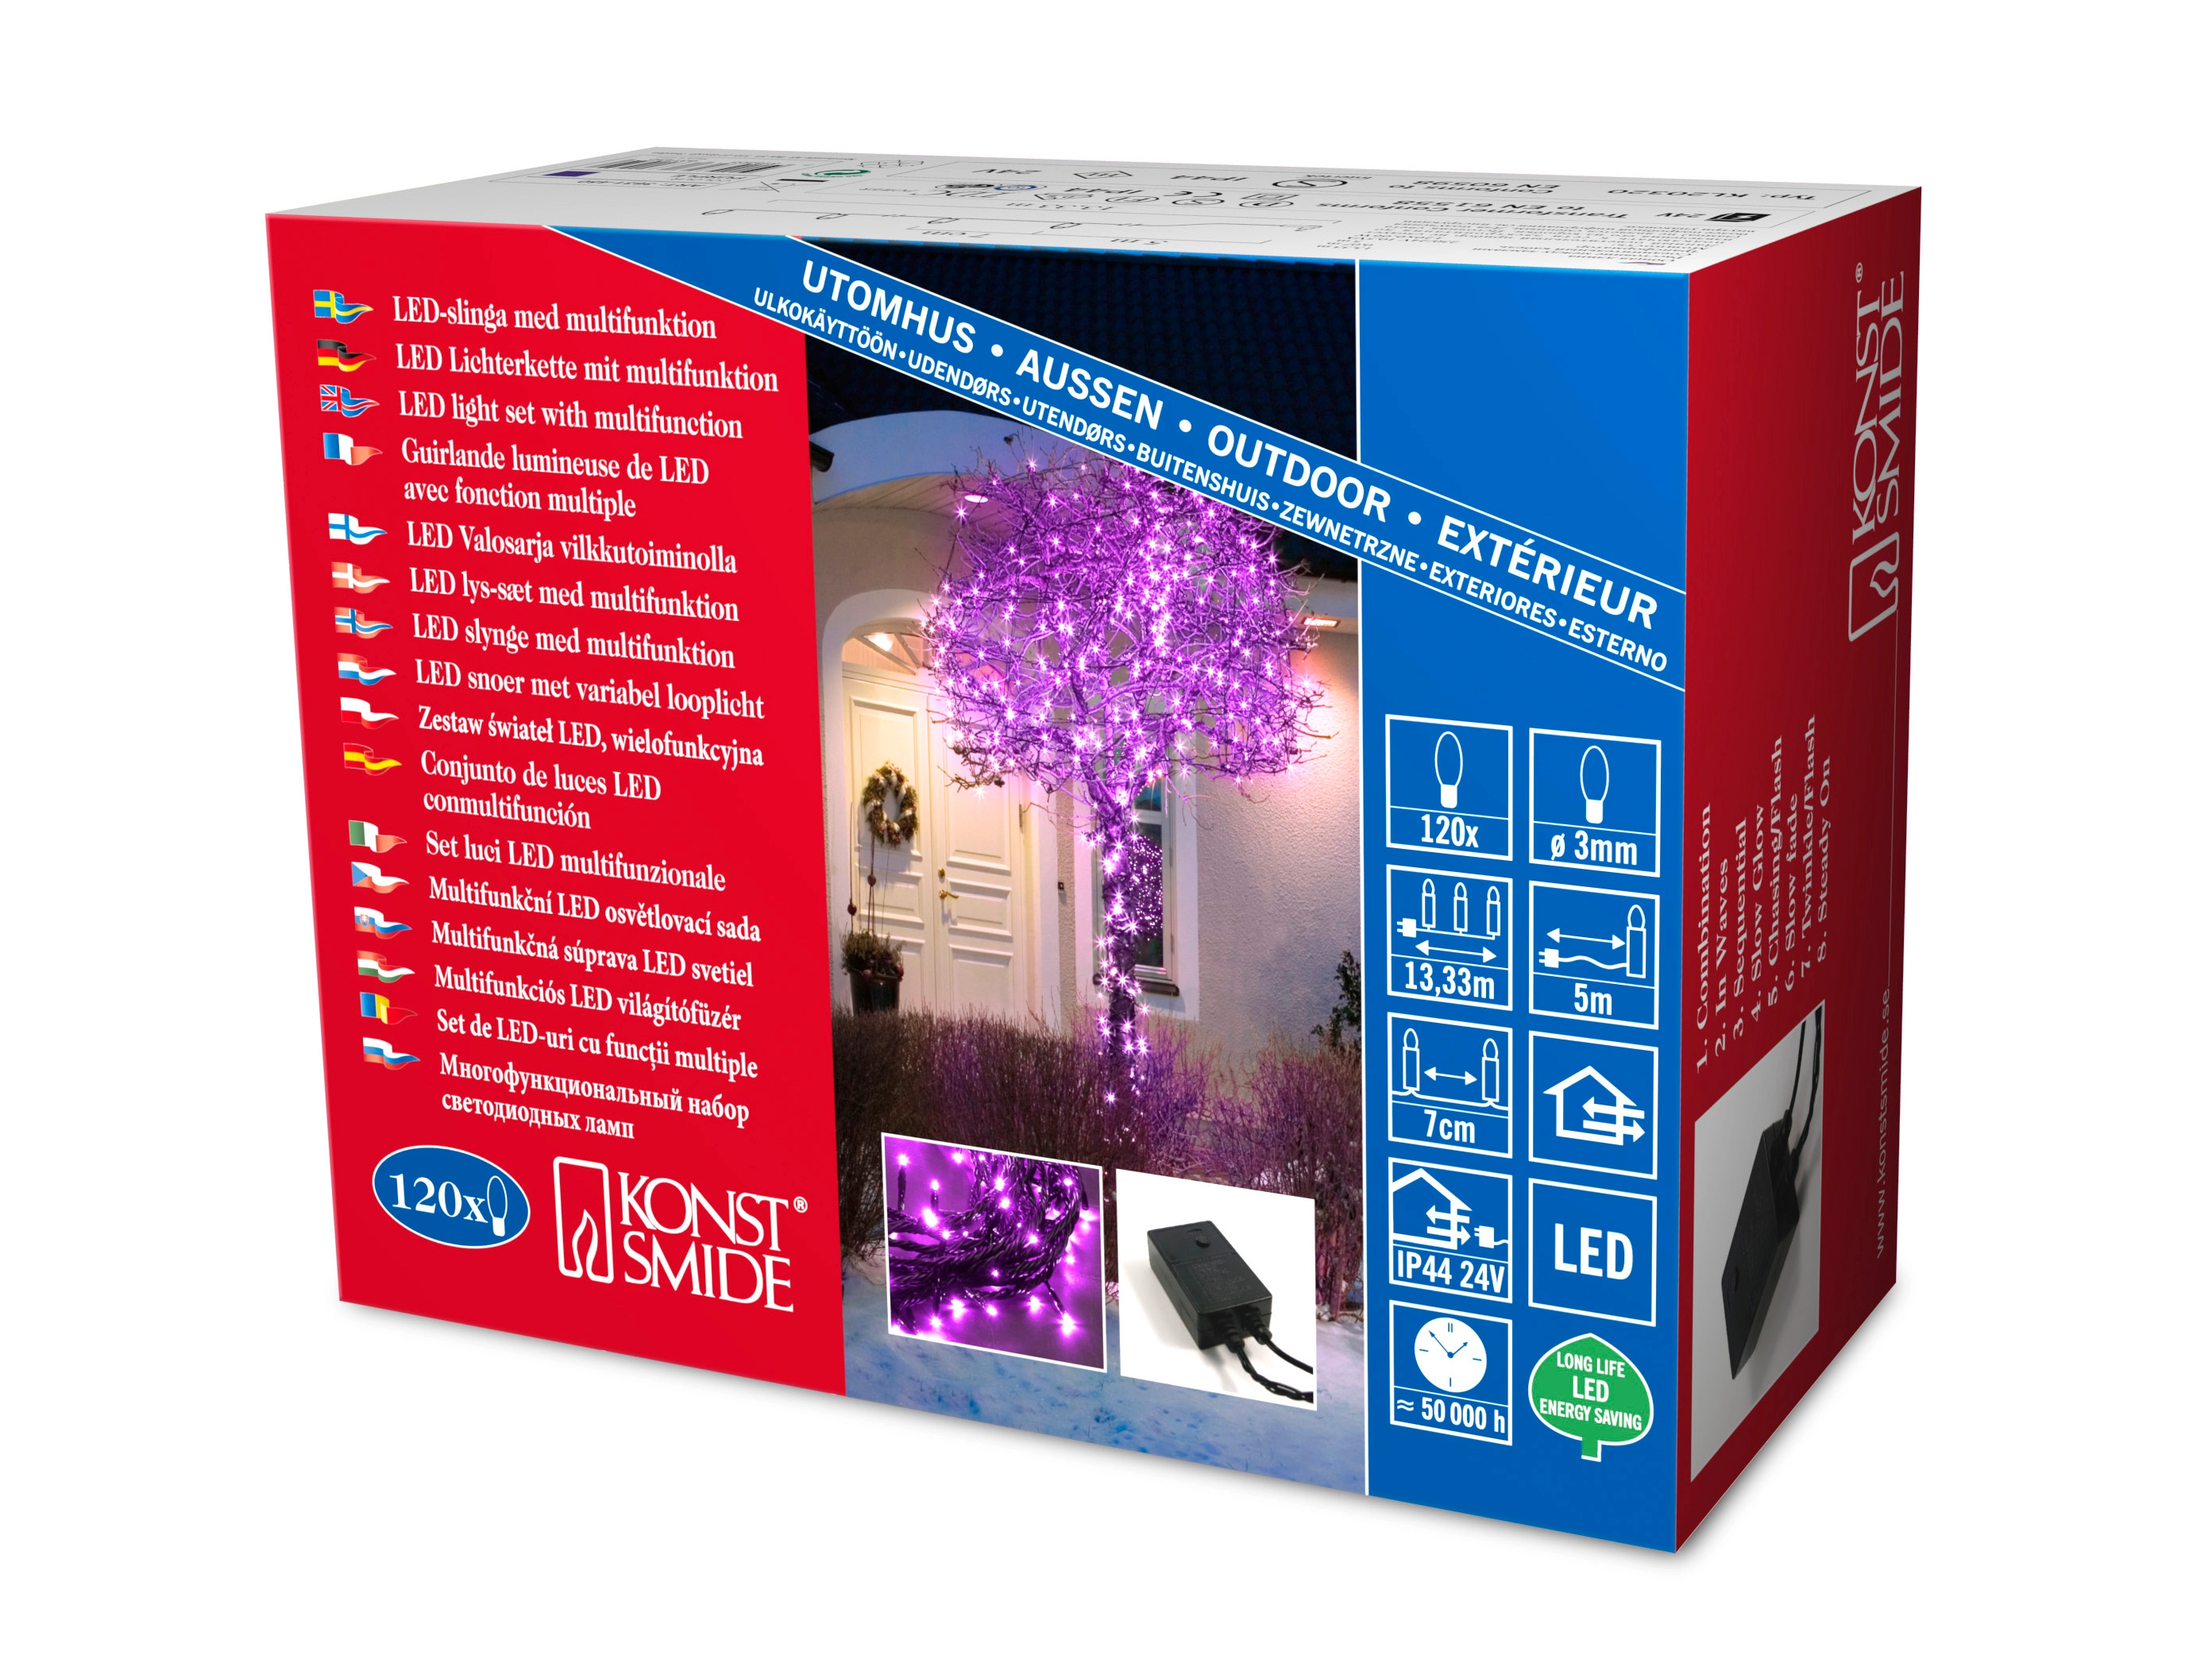 LED Multifunktion kaufen bei 120 LED-Micro-Lichterkette OBI Konstsmide Purpur